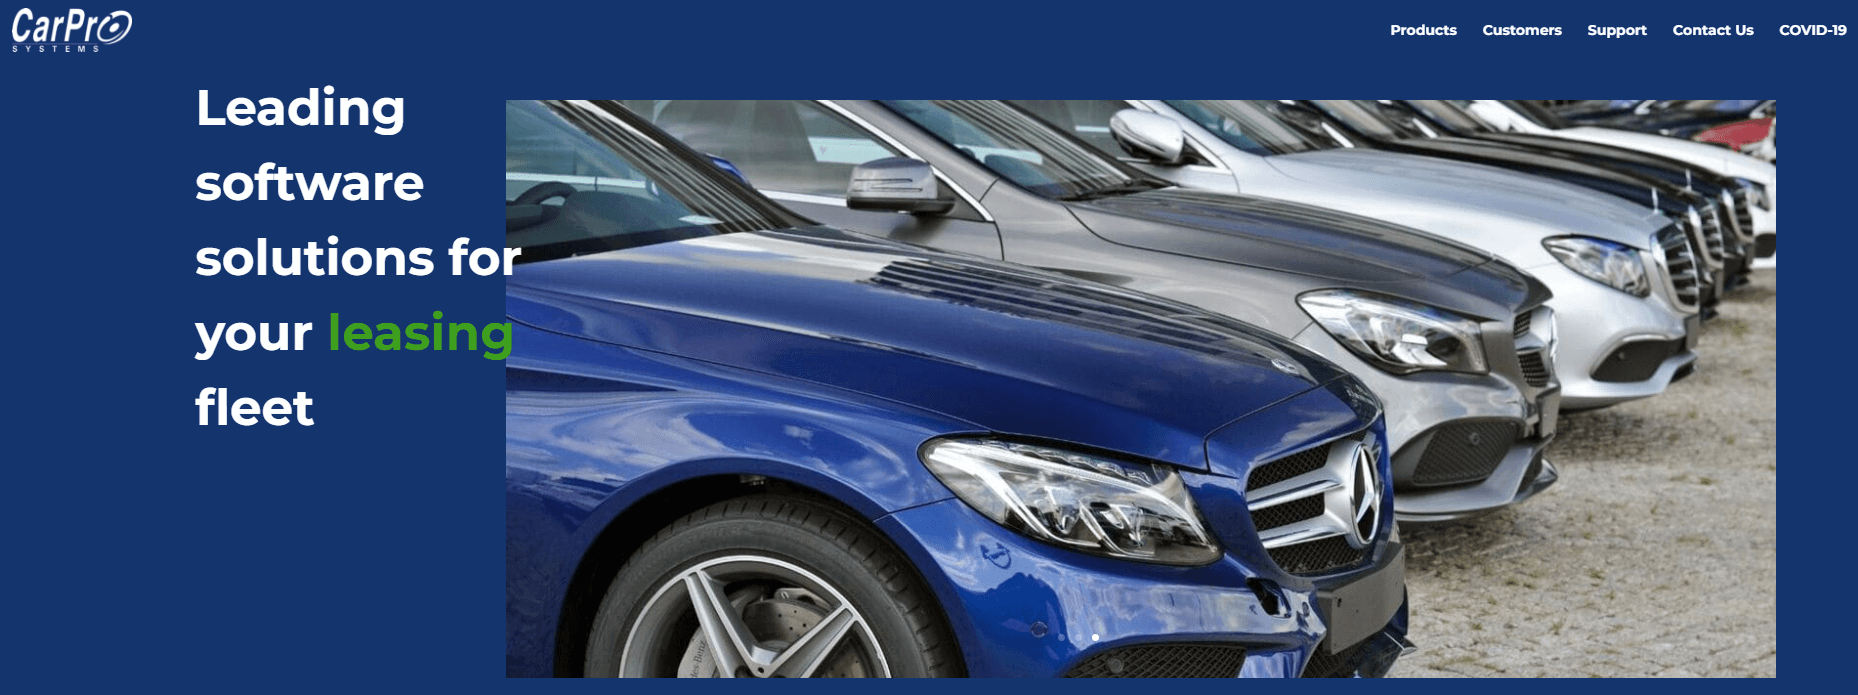 CarPro car rental booking software